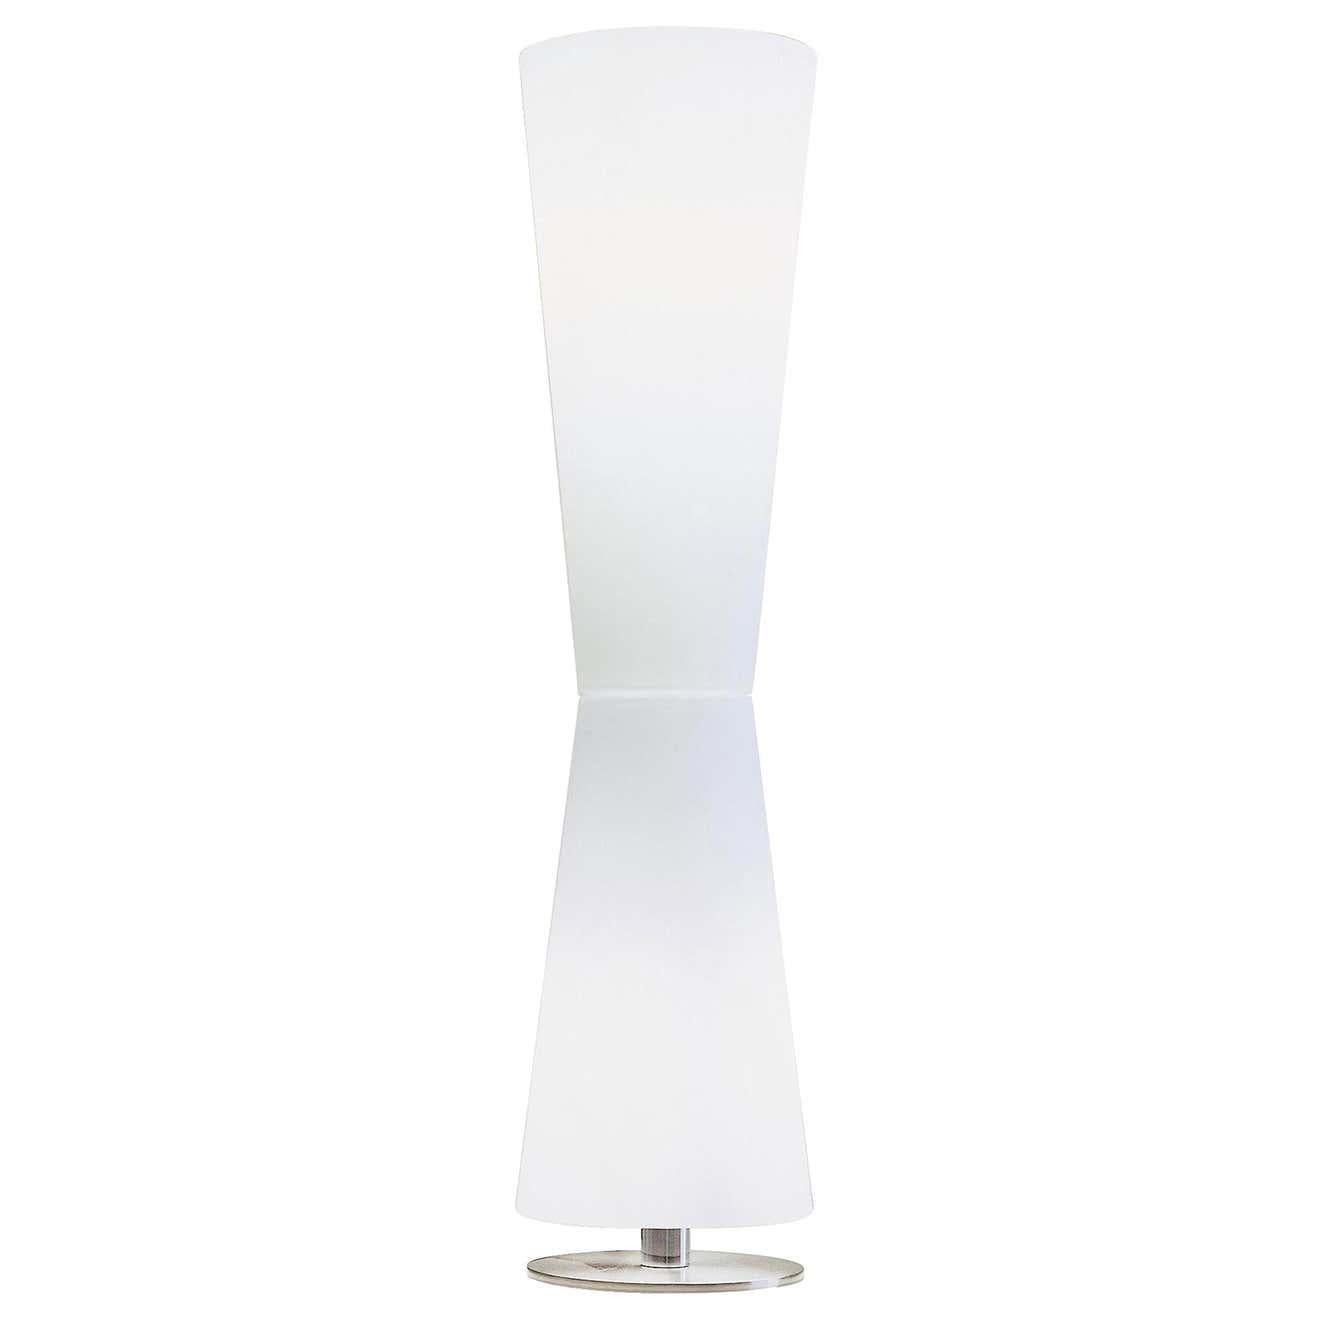 Stefano Casciani Table Lamp 'Lu-Lu' Murano Glass by Oluce In New Condition For Sale In Barcelona, Barcelona